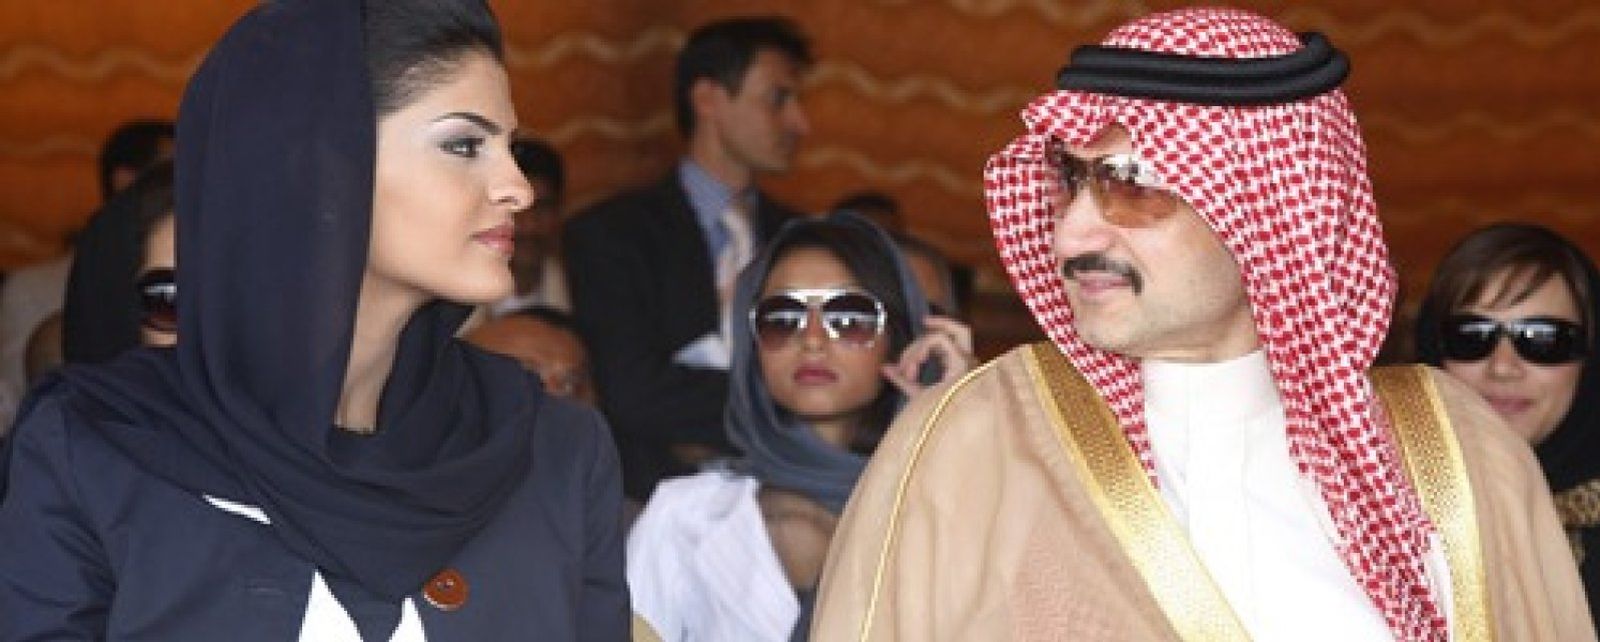 Foto: Twitter incorpora a su capital a un príncipe saudí por 300 millones